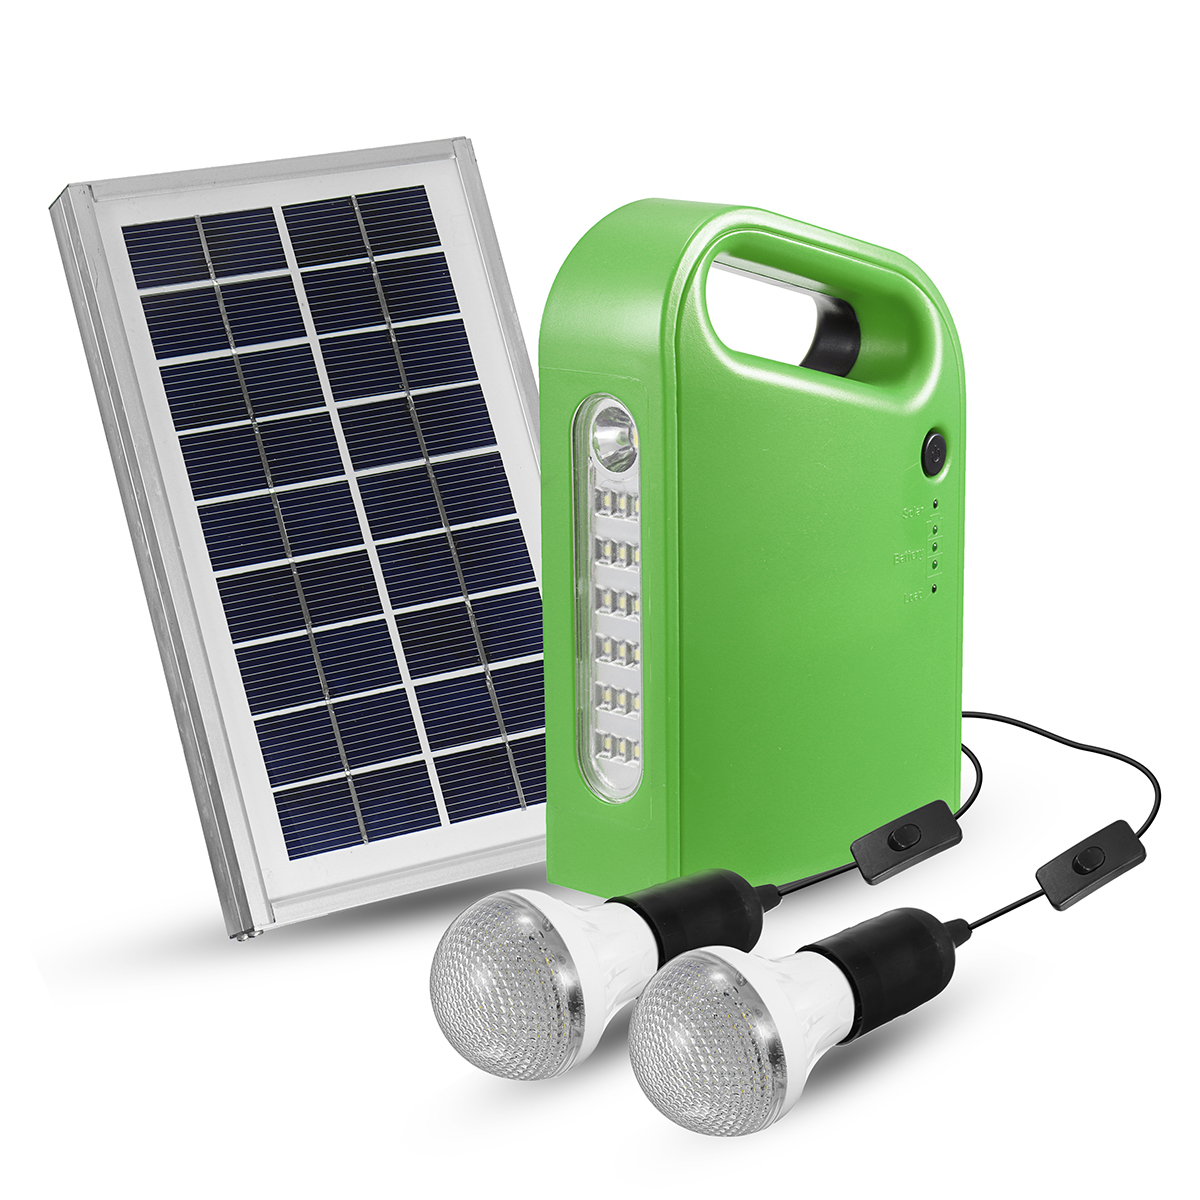 

3W 9V Solar Panel Generator Kit 6V USB Charger Home System with 2 LED Bulbs Light